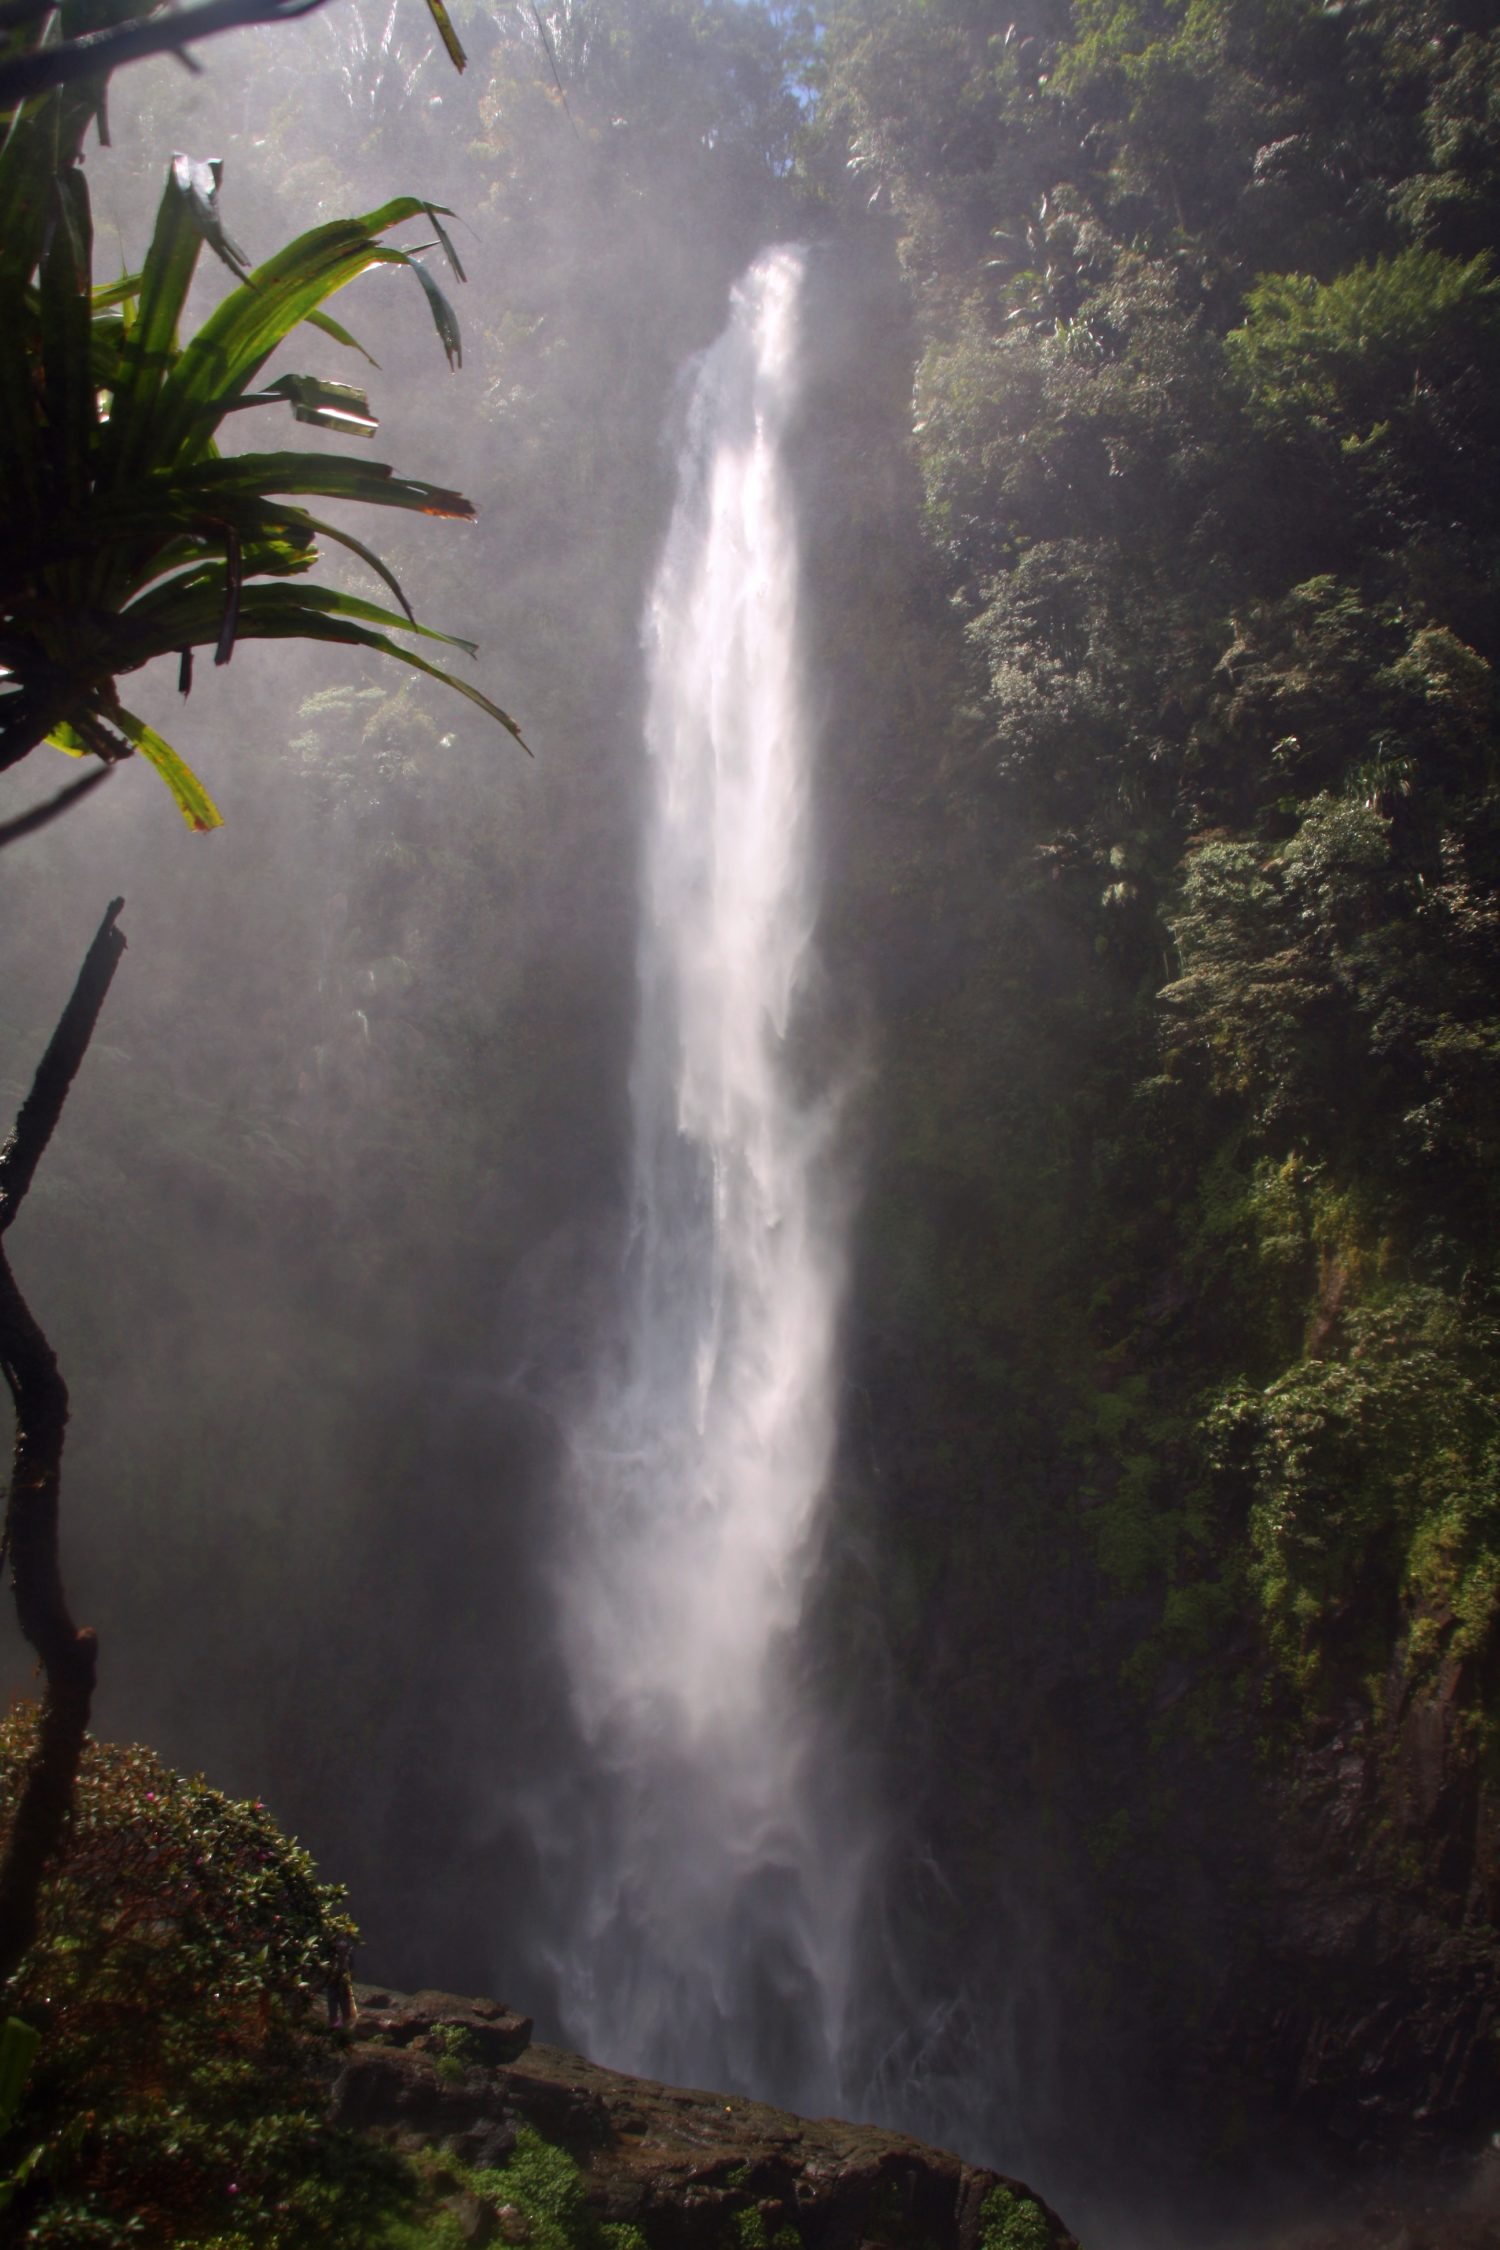 Trekking to Western Julan waterfall, the highest in Sarawak